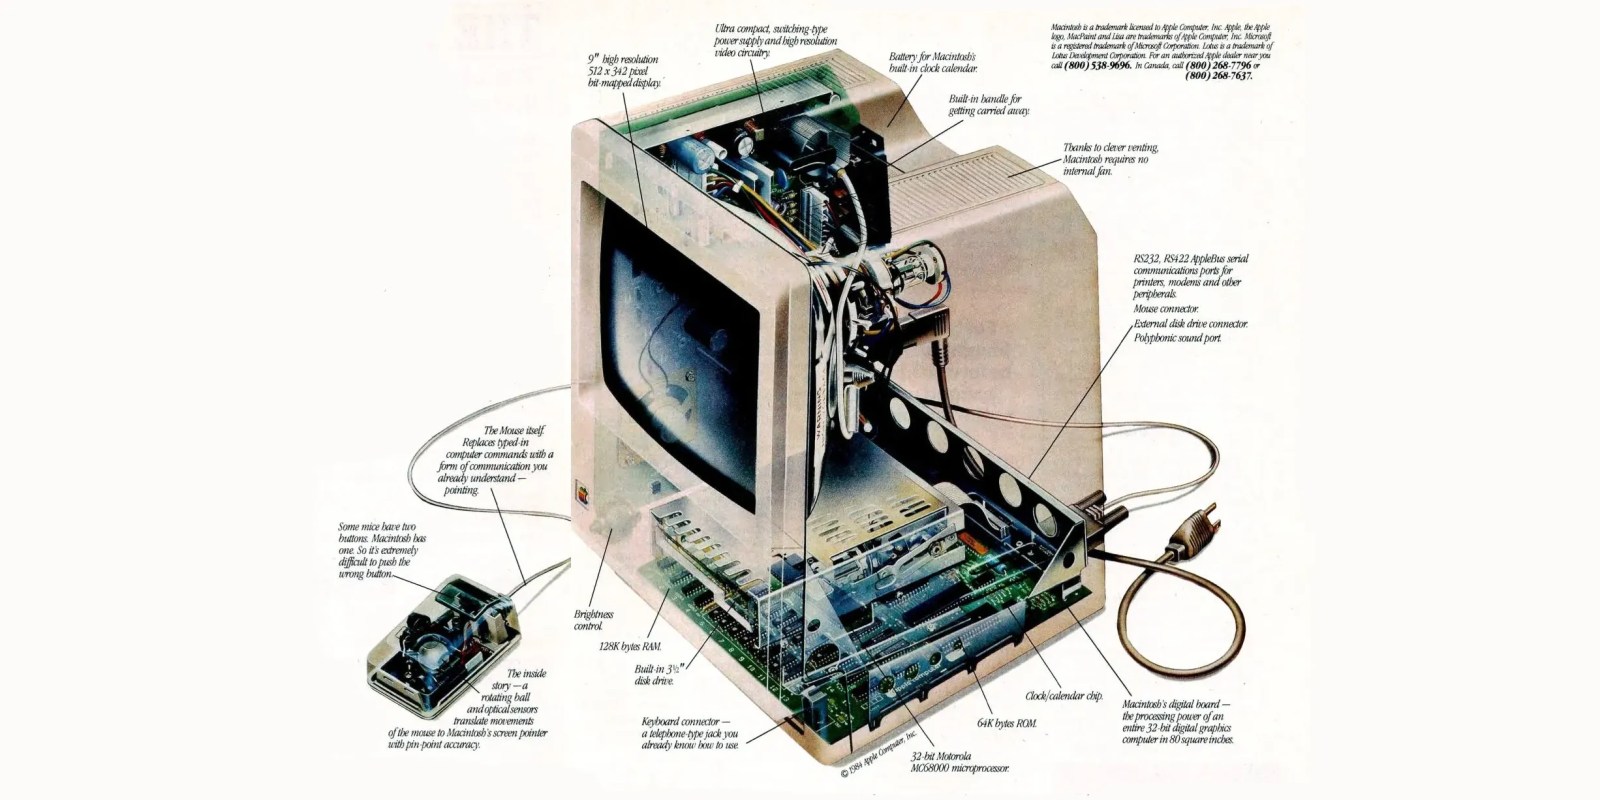 Macintosh 40th anniversary | Original print ad image